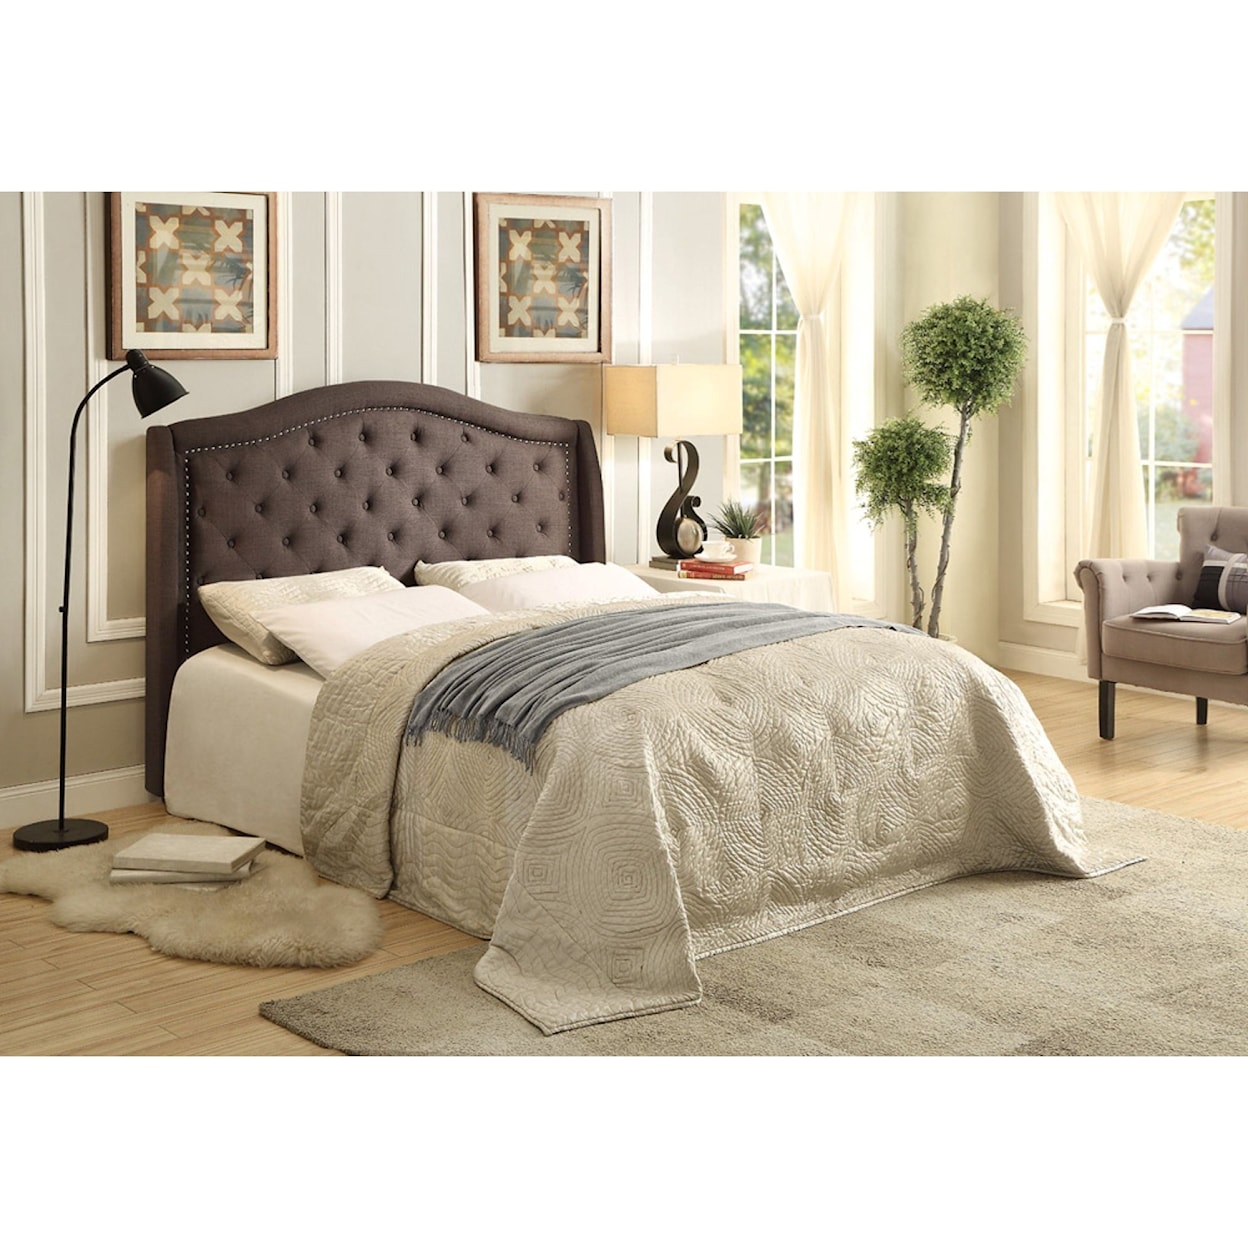 Homelegance Furniture Bryndle Queen Upholstered Bed